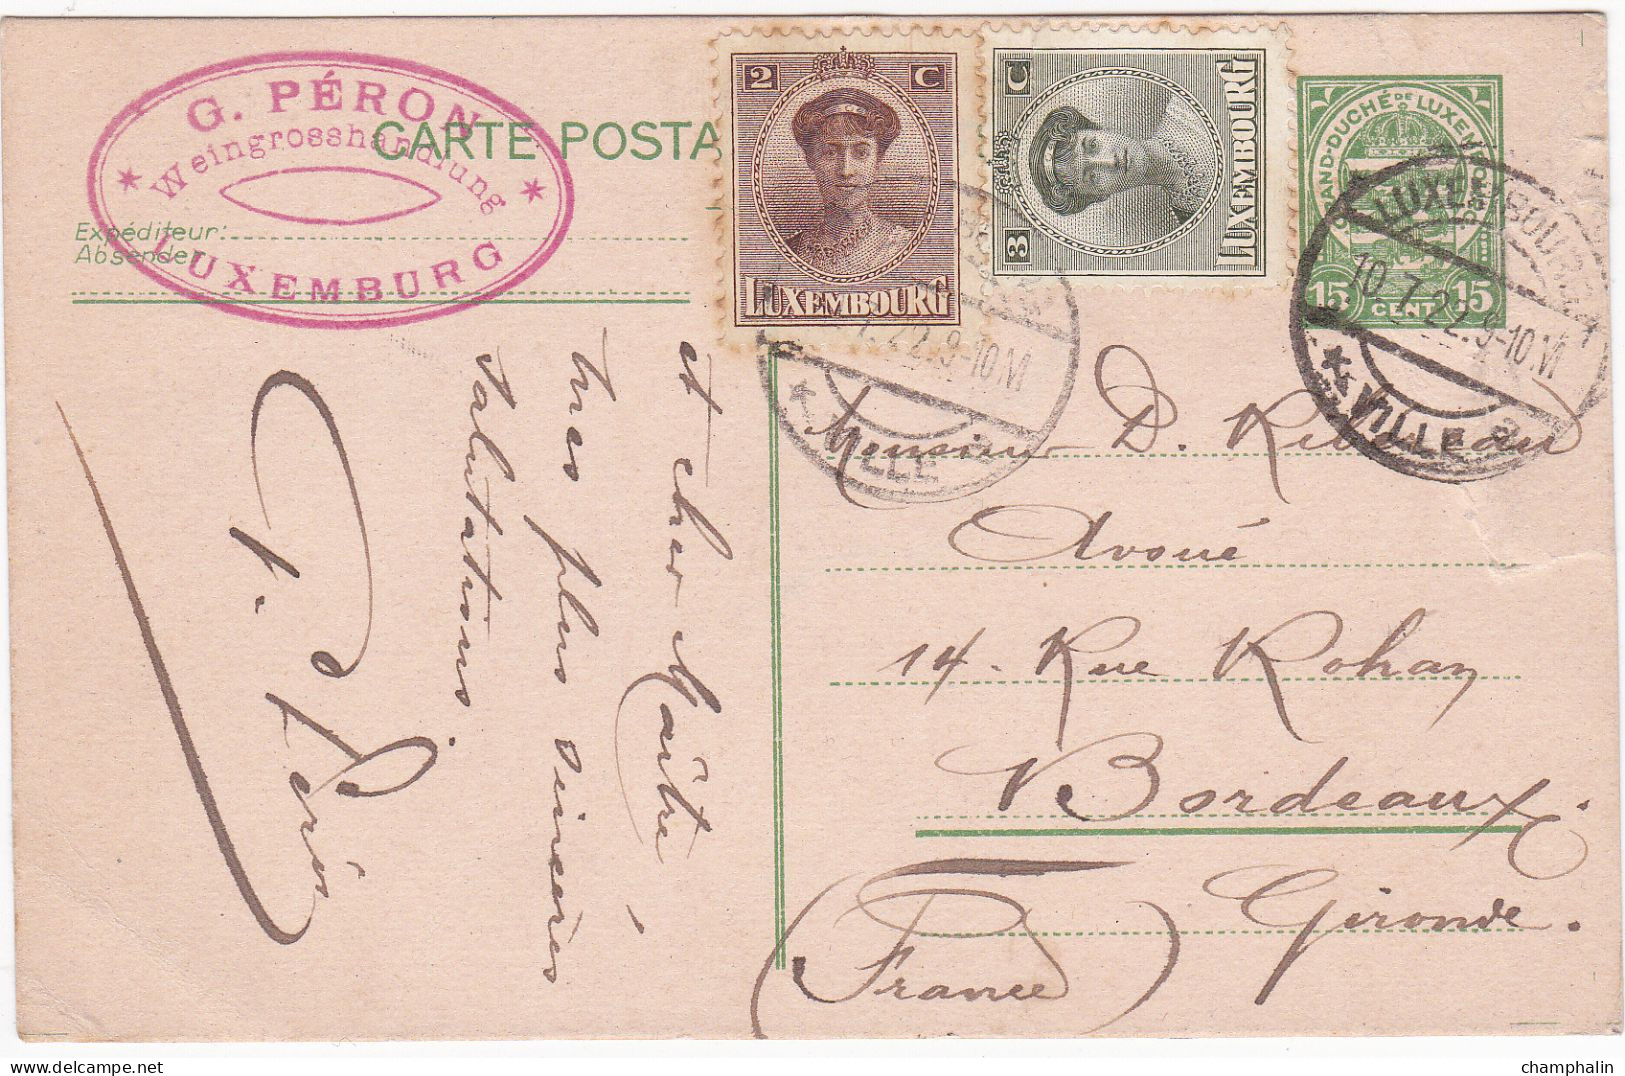 Luxembourg - Entier Postal De Luxembourg Pour Bordeaux (33) - 8 Juillet 1922 - Timbres 15c + YT 119 & 120 - 2 CAD Ronds - Postwaardestukken